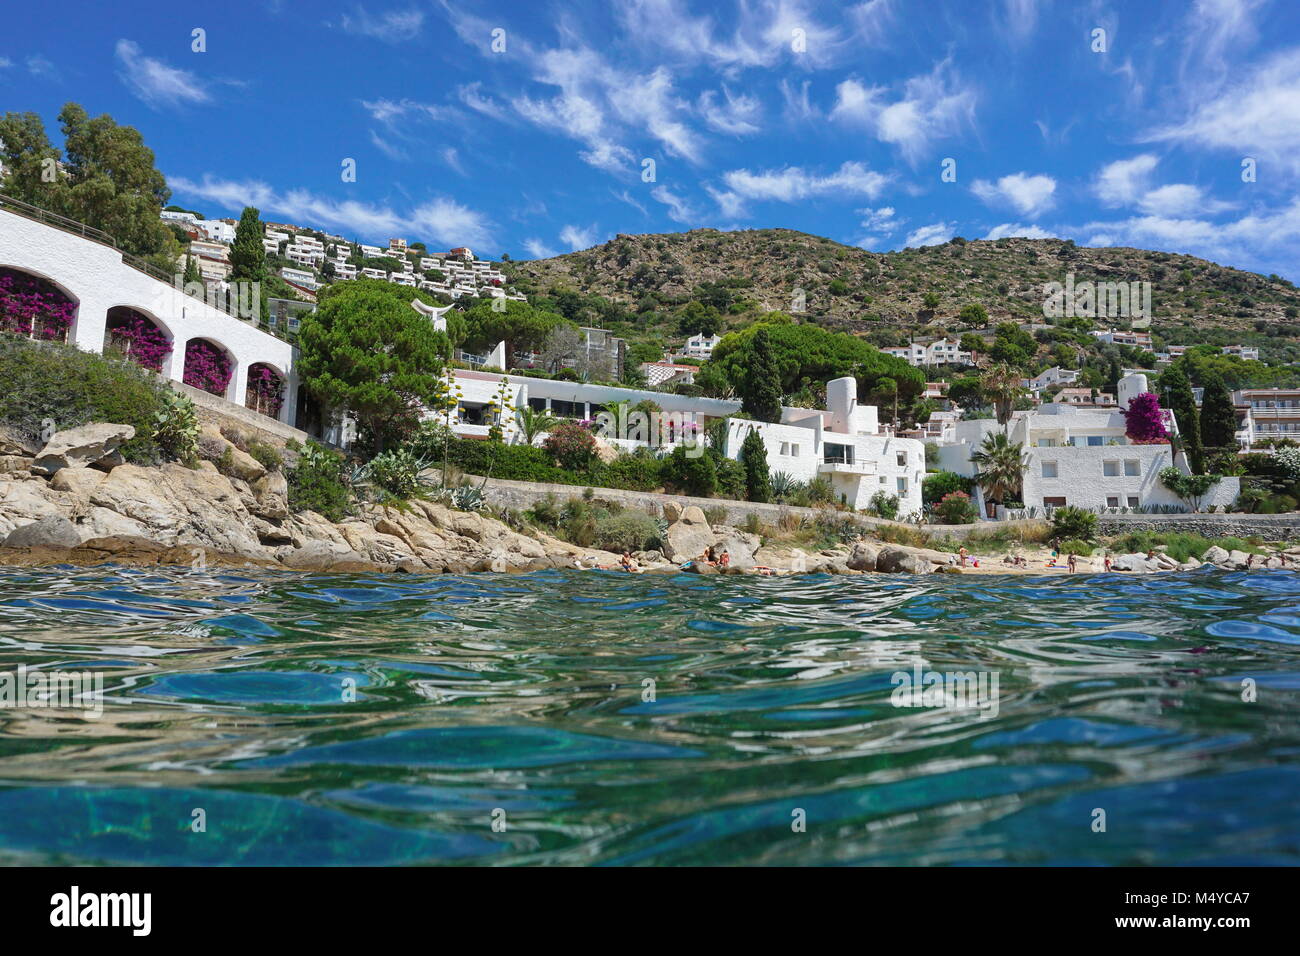 Spanien Costa Brava Mittelmeerküste mit Häusern, Katalonien, Canyelles Petites, Roses, Girona, von Meer Oberfläche gesehen Stockfoto